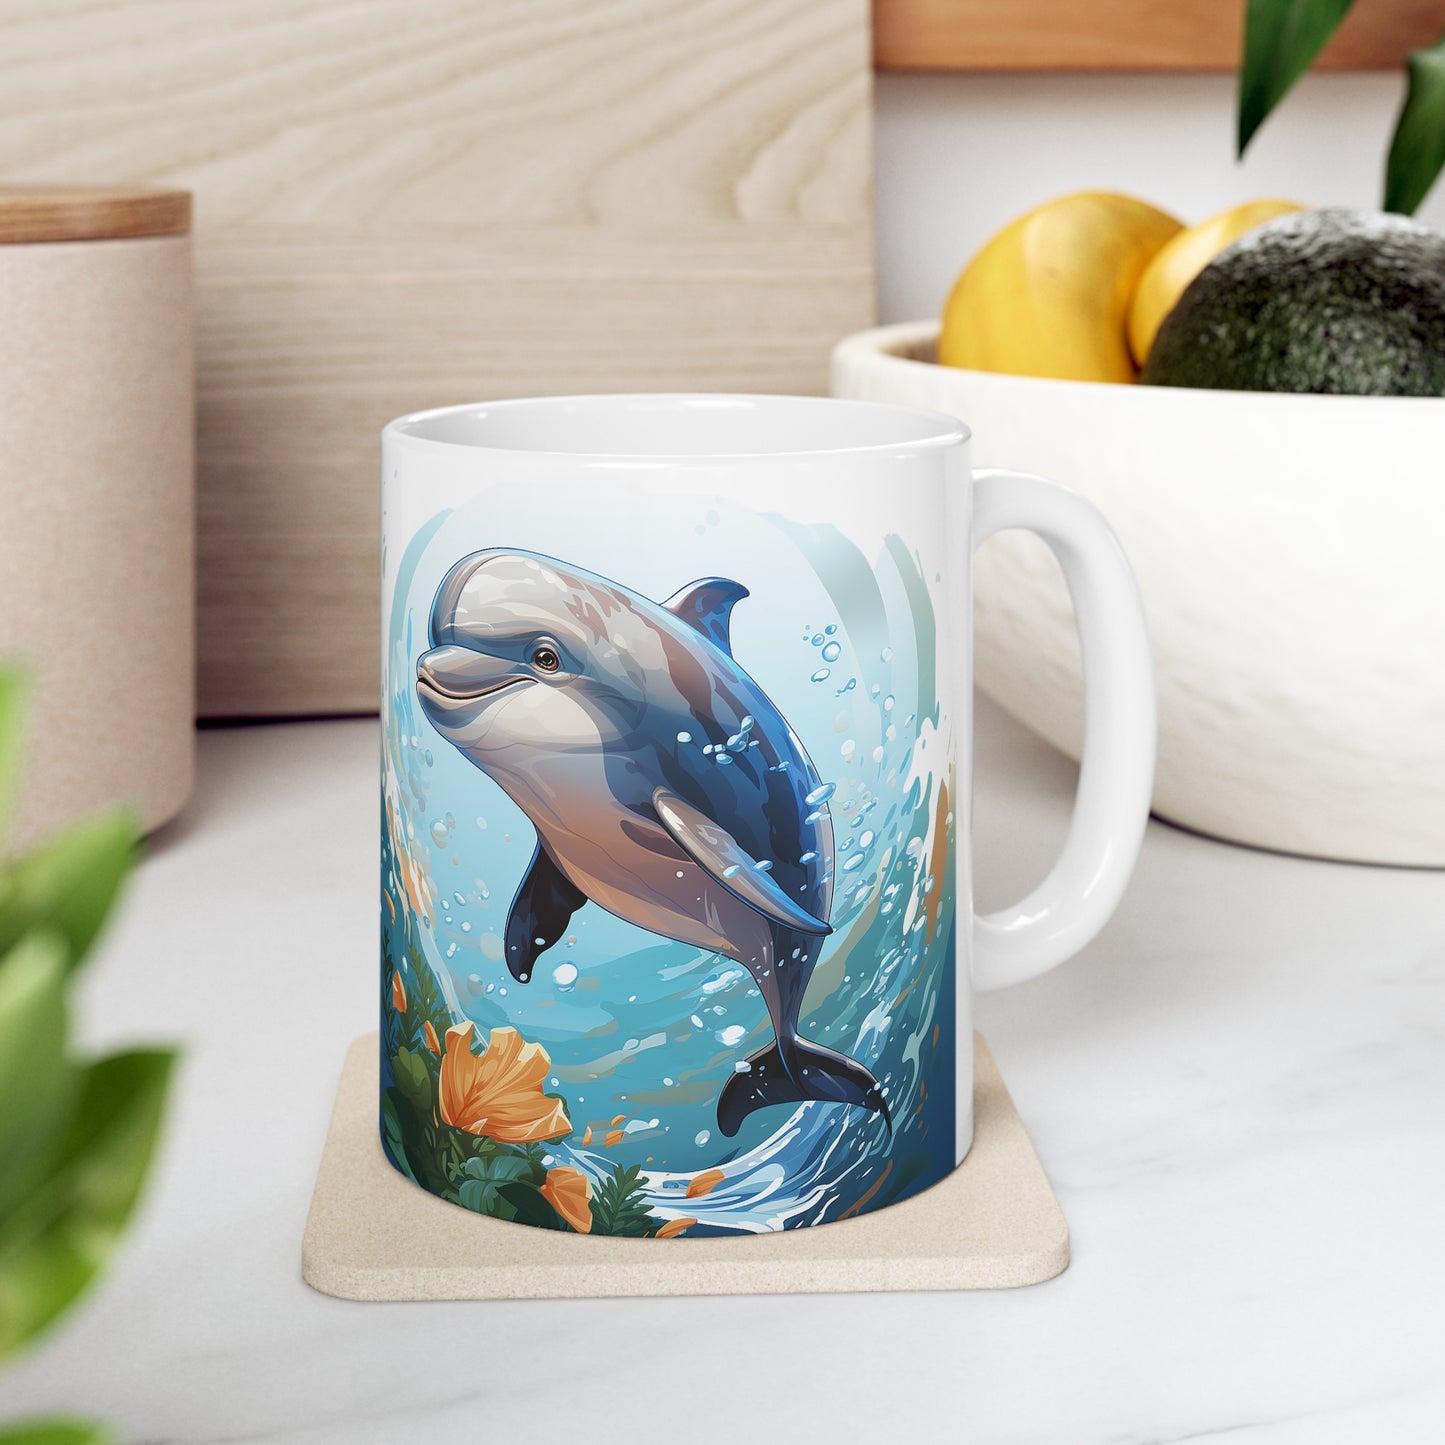 The Malloy Dolphin Collection Ceramic Mug 11oz